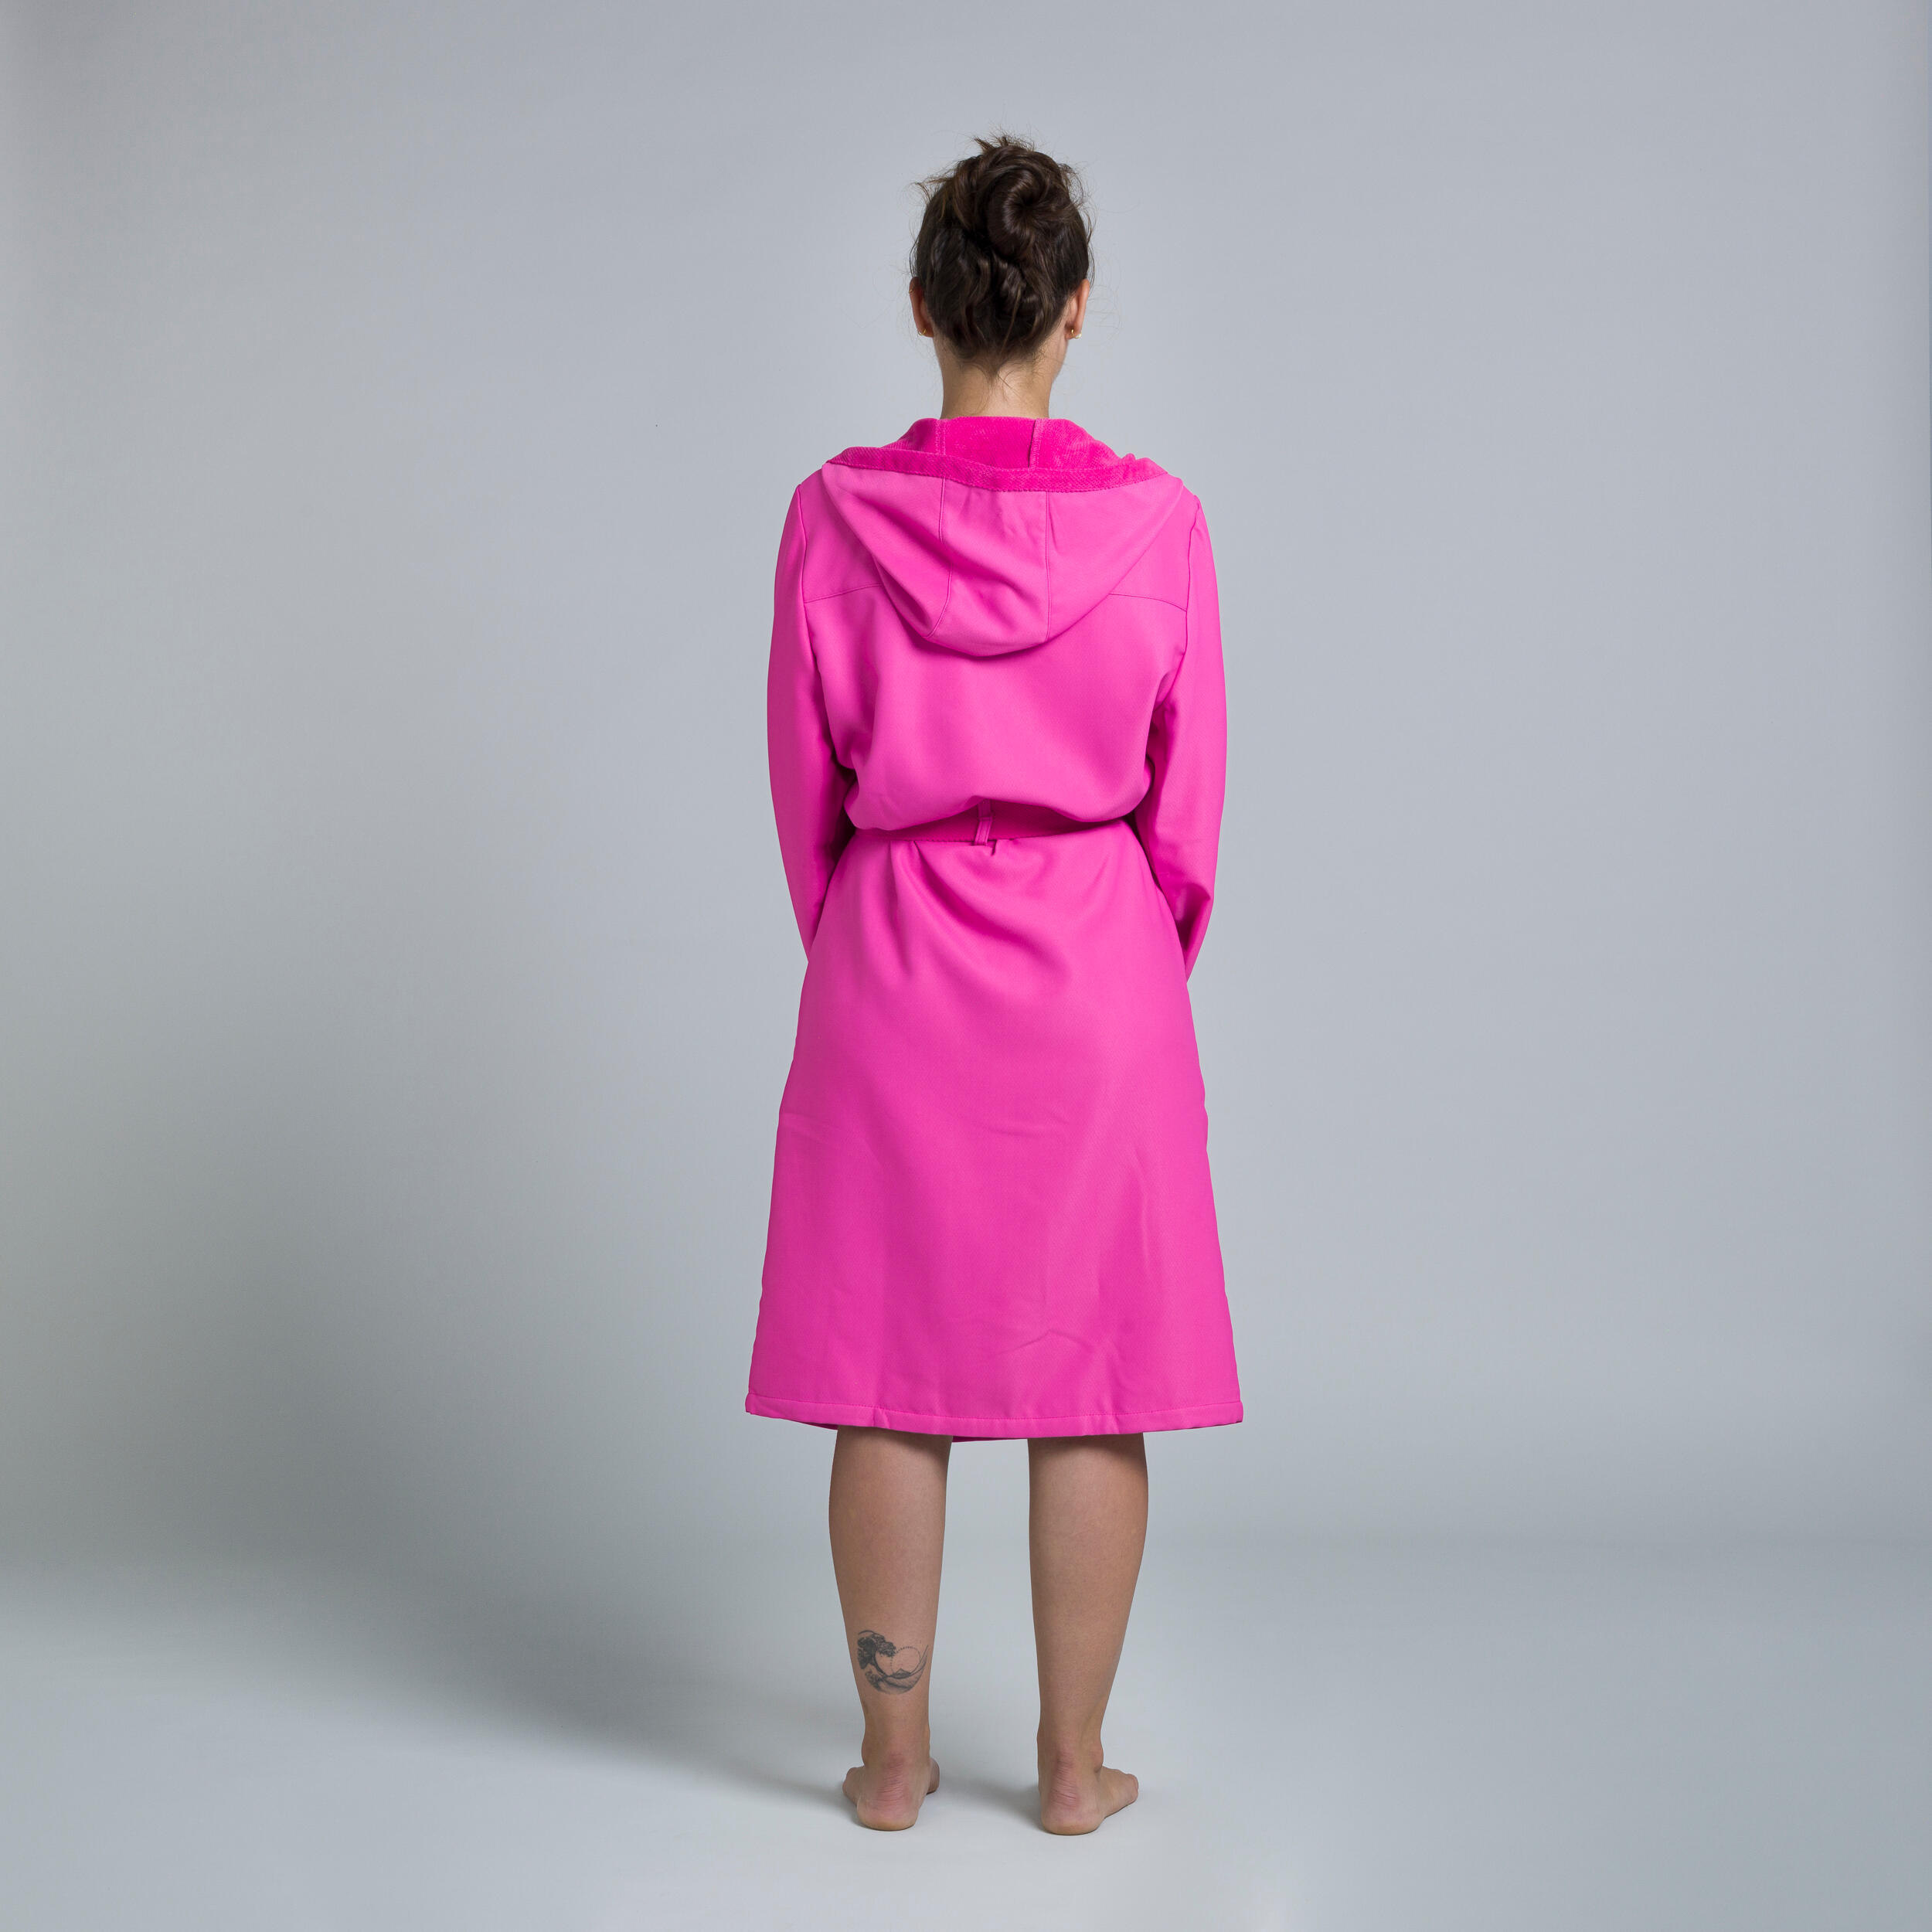 Women's Compact Bathrobe and Towel Set - Pink 4/8